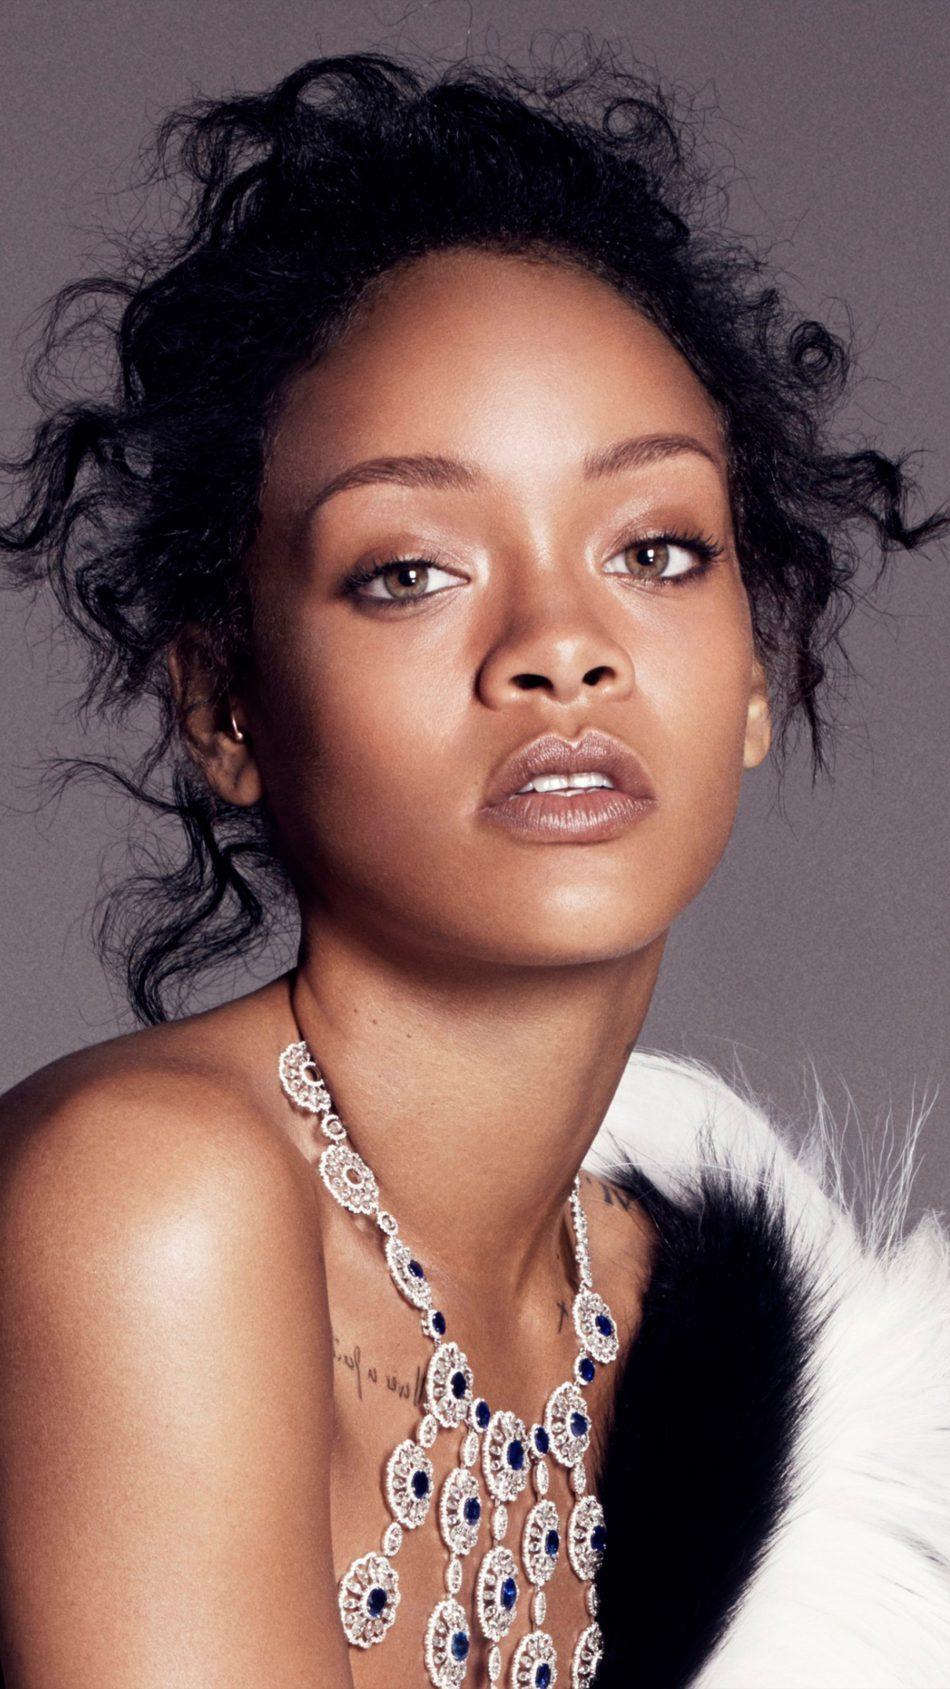 Singer Rihanna 2018 Photohoot Free 4K Ultra HD Mobile Wallpaper